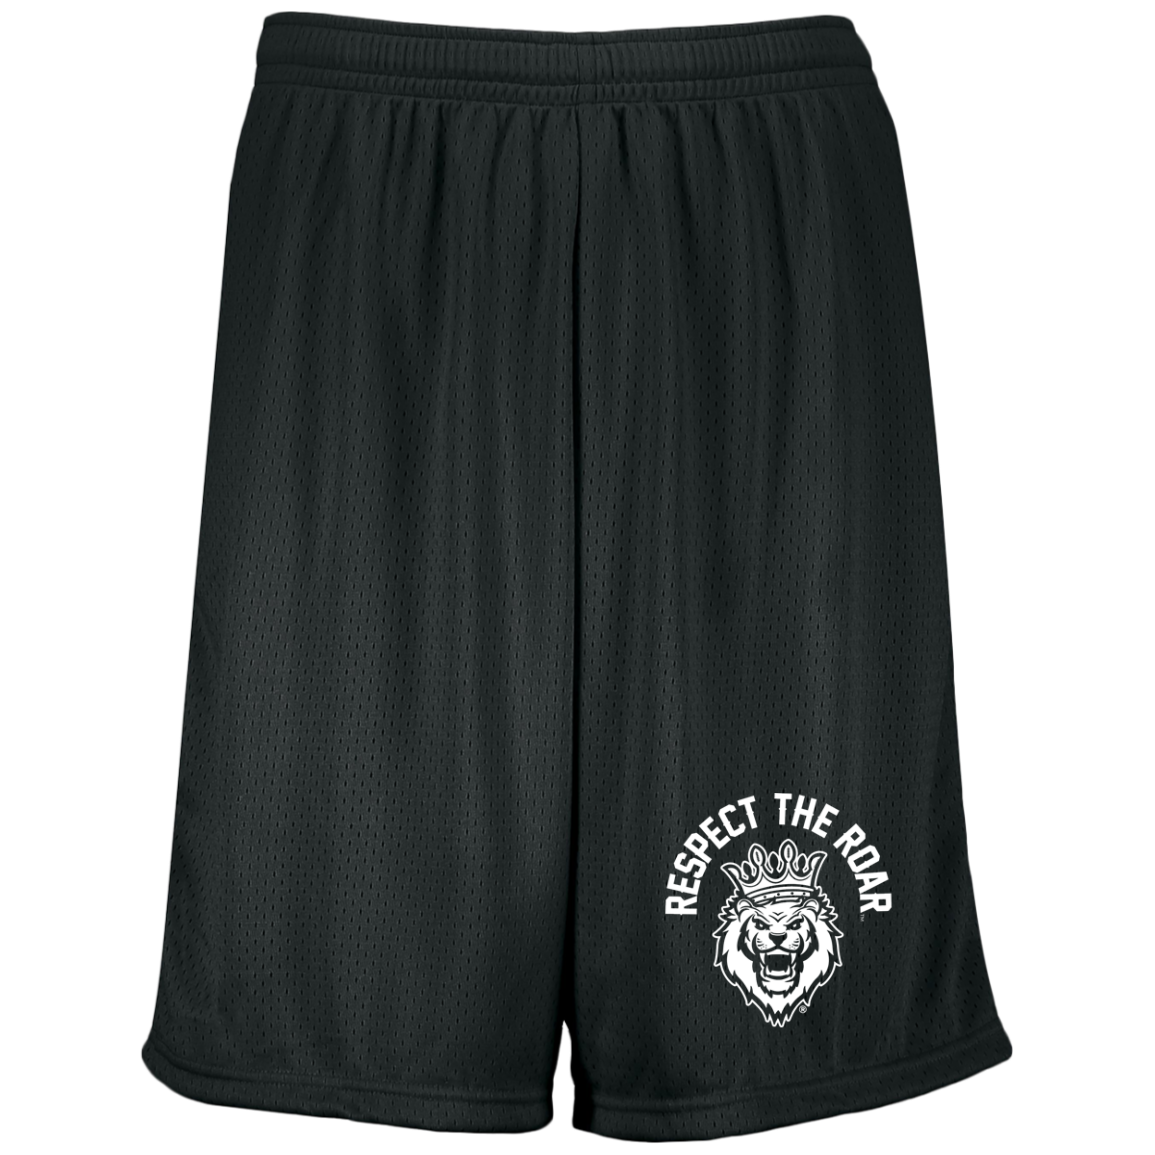 Respect The Roar® Men's 9 inch Inseam Mesh Shorts